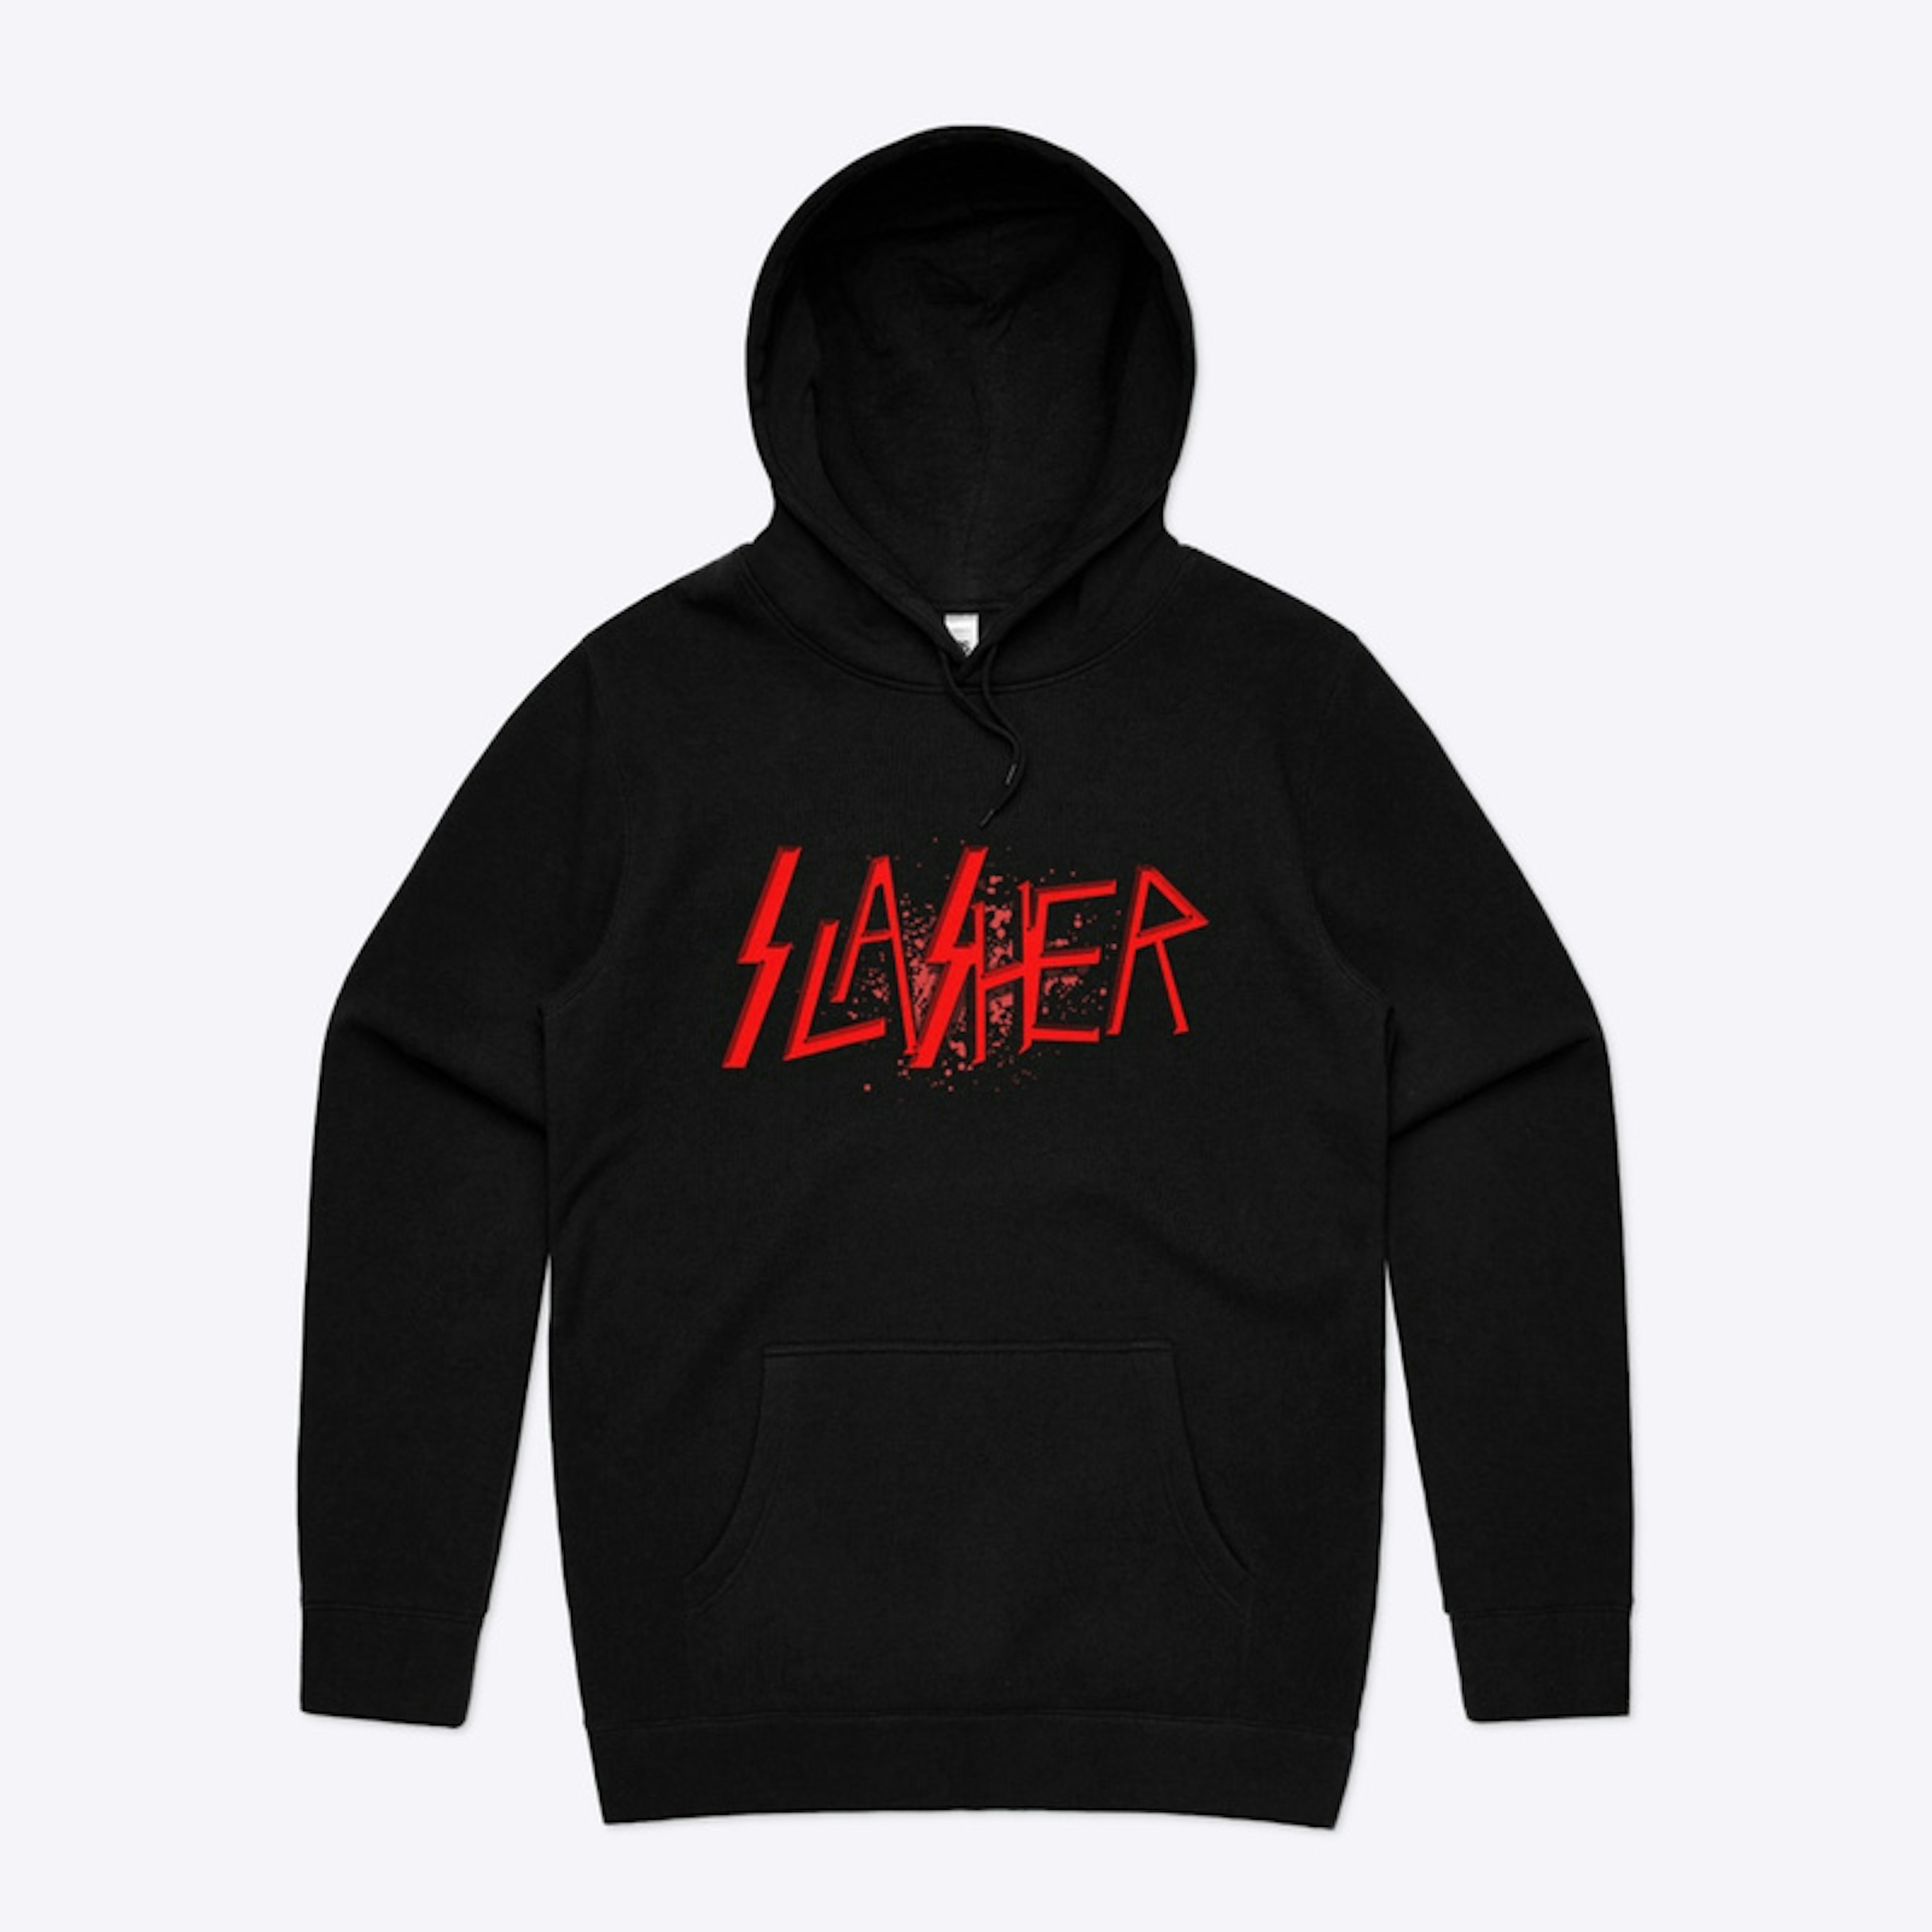 "Slayer" Slasher limited print T 